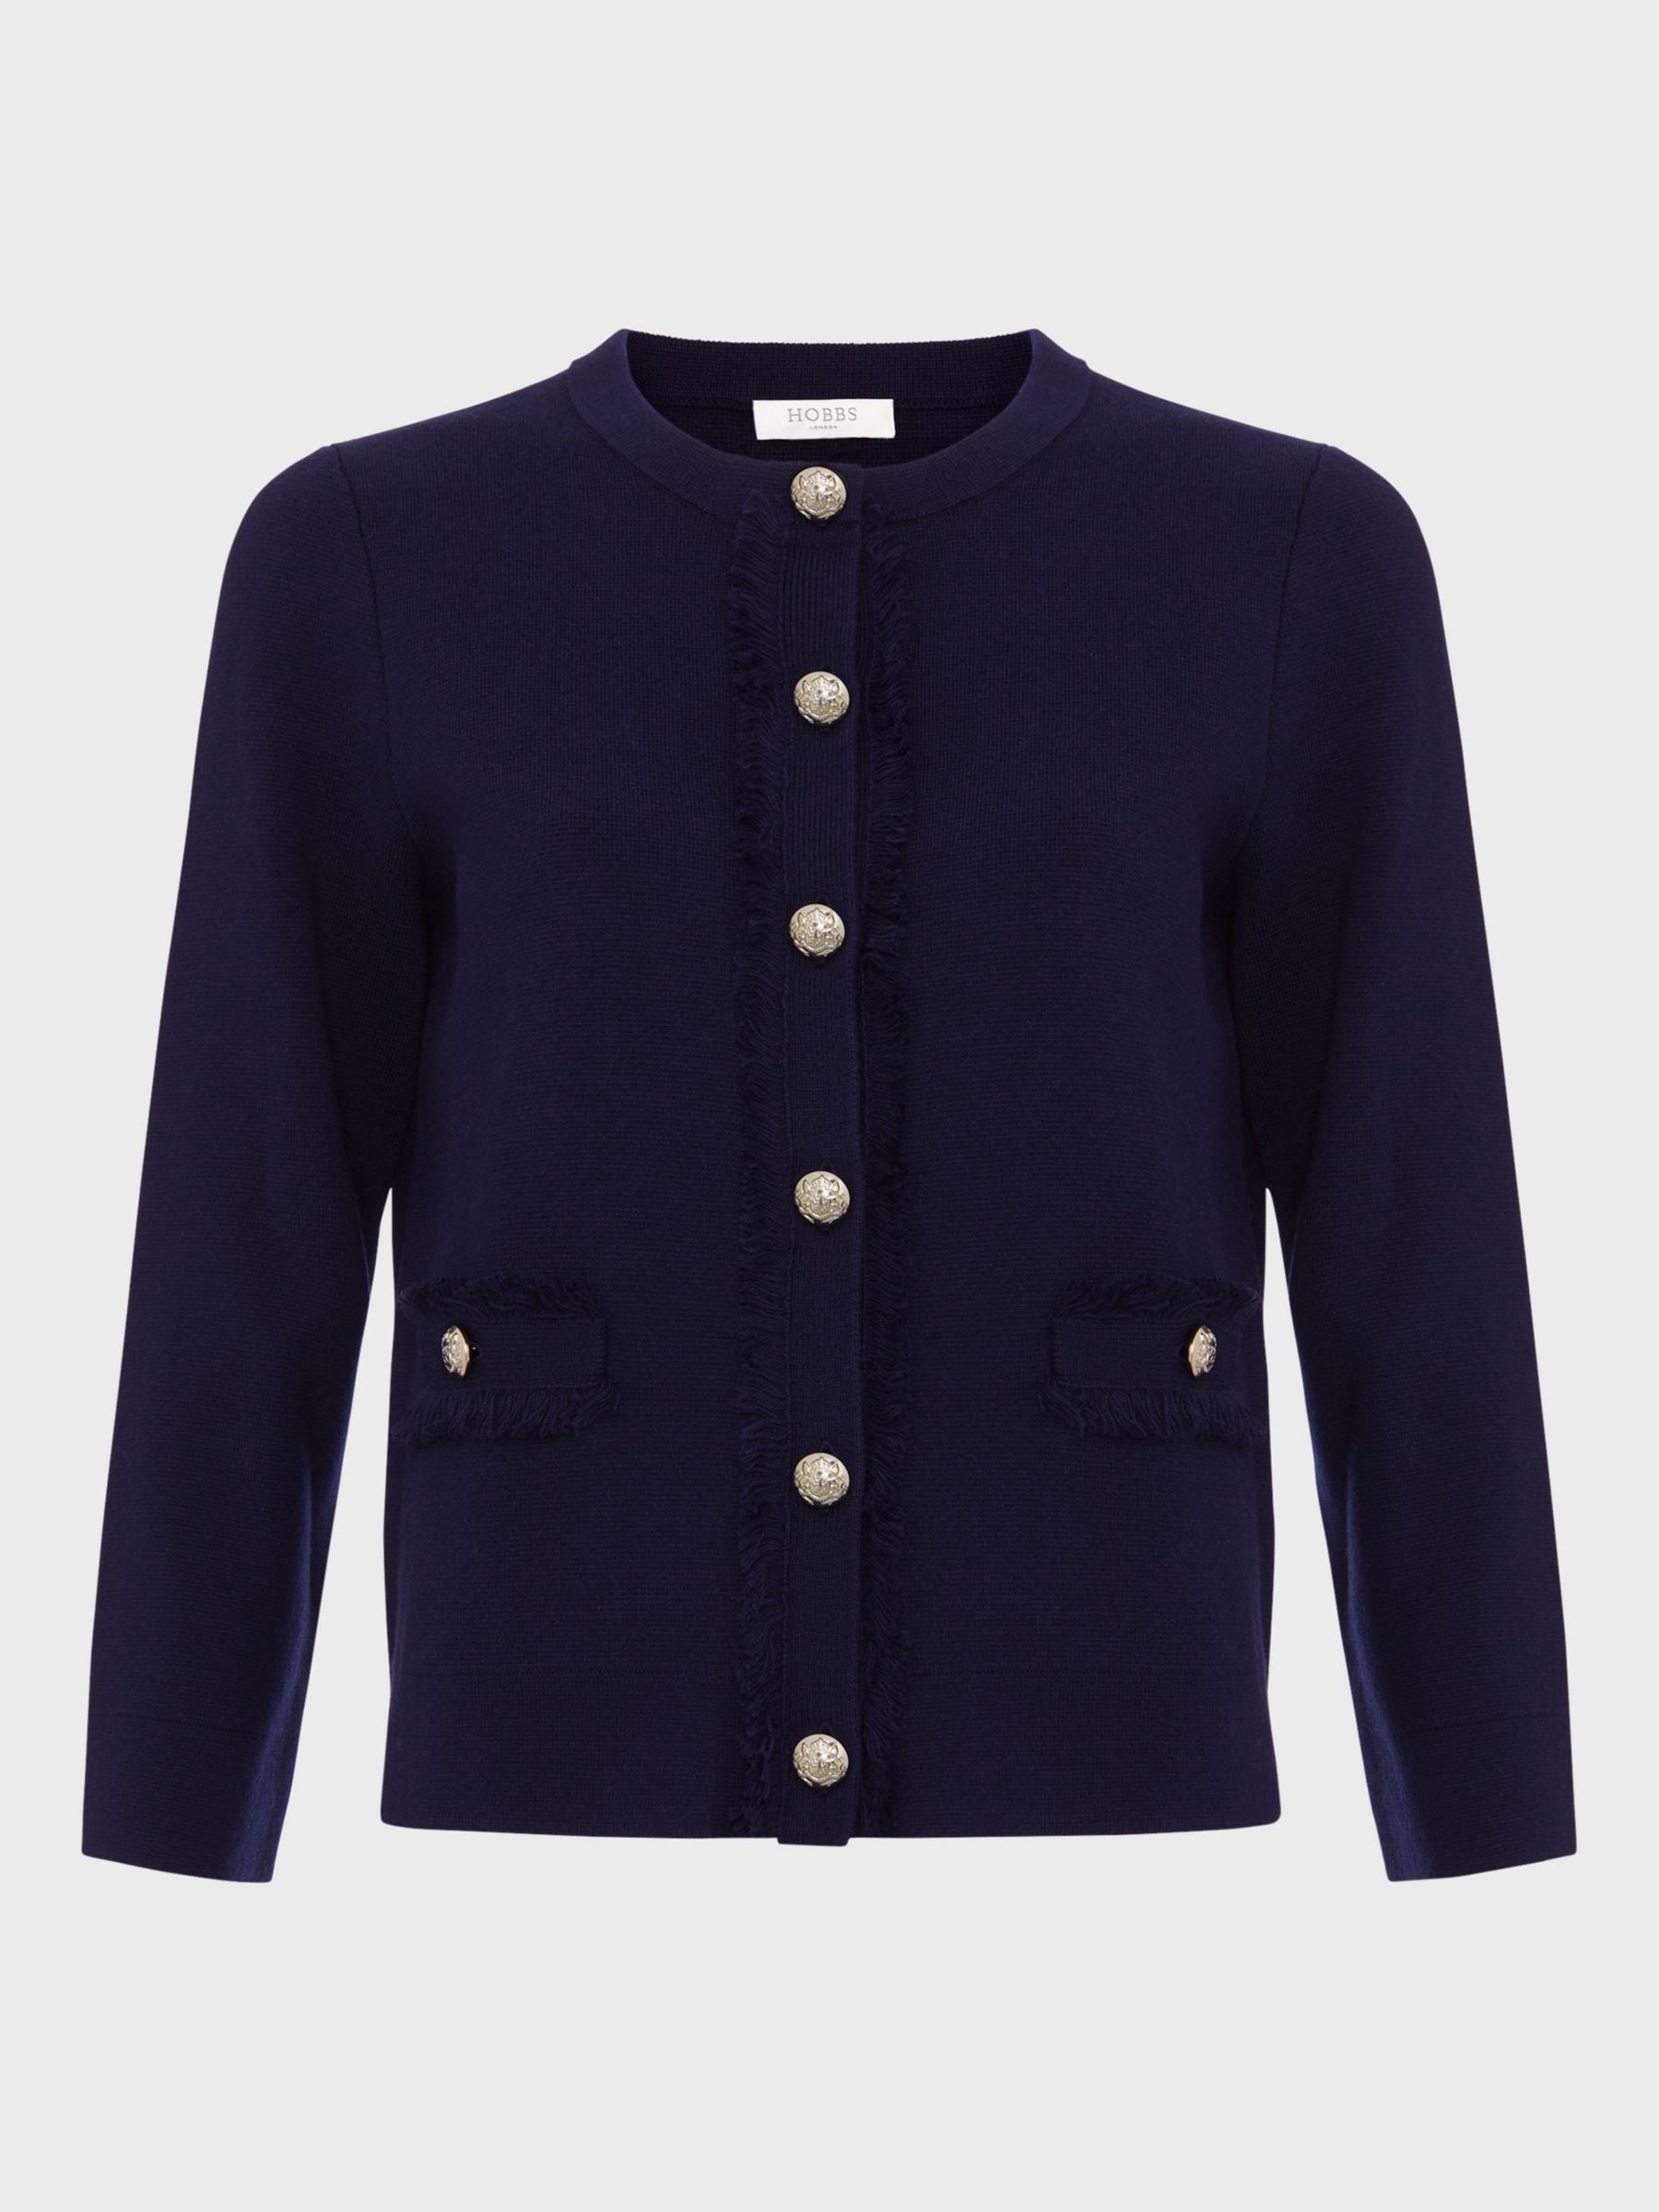 Hobbs Sairey Knitted Jacket, Midnight Navy, L